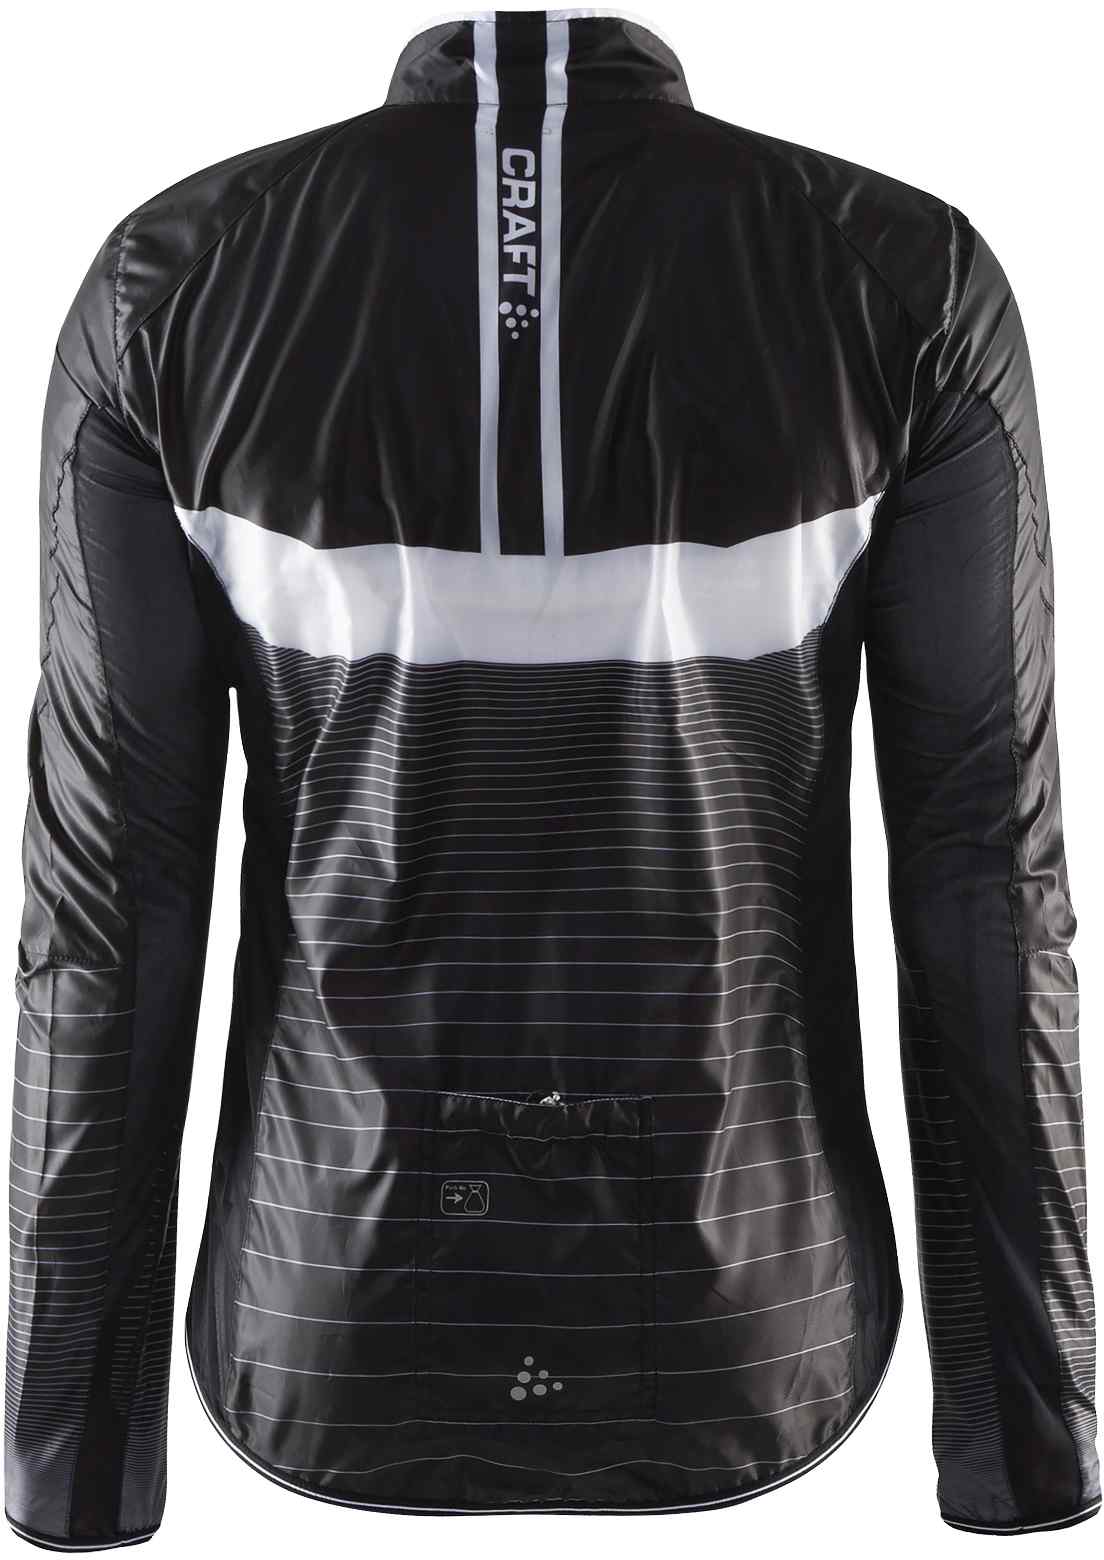 Men’s cycling jacket